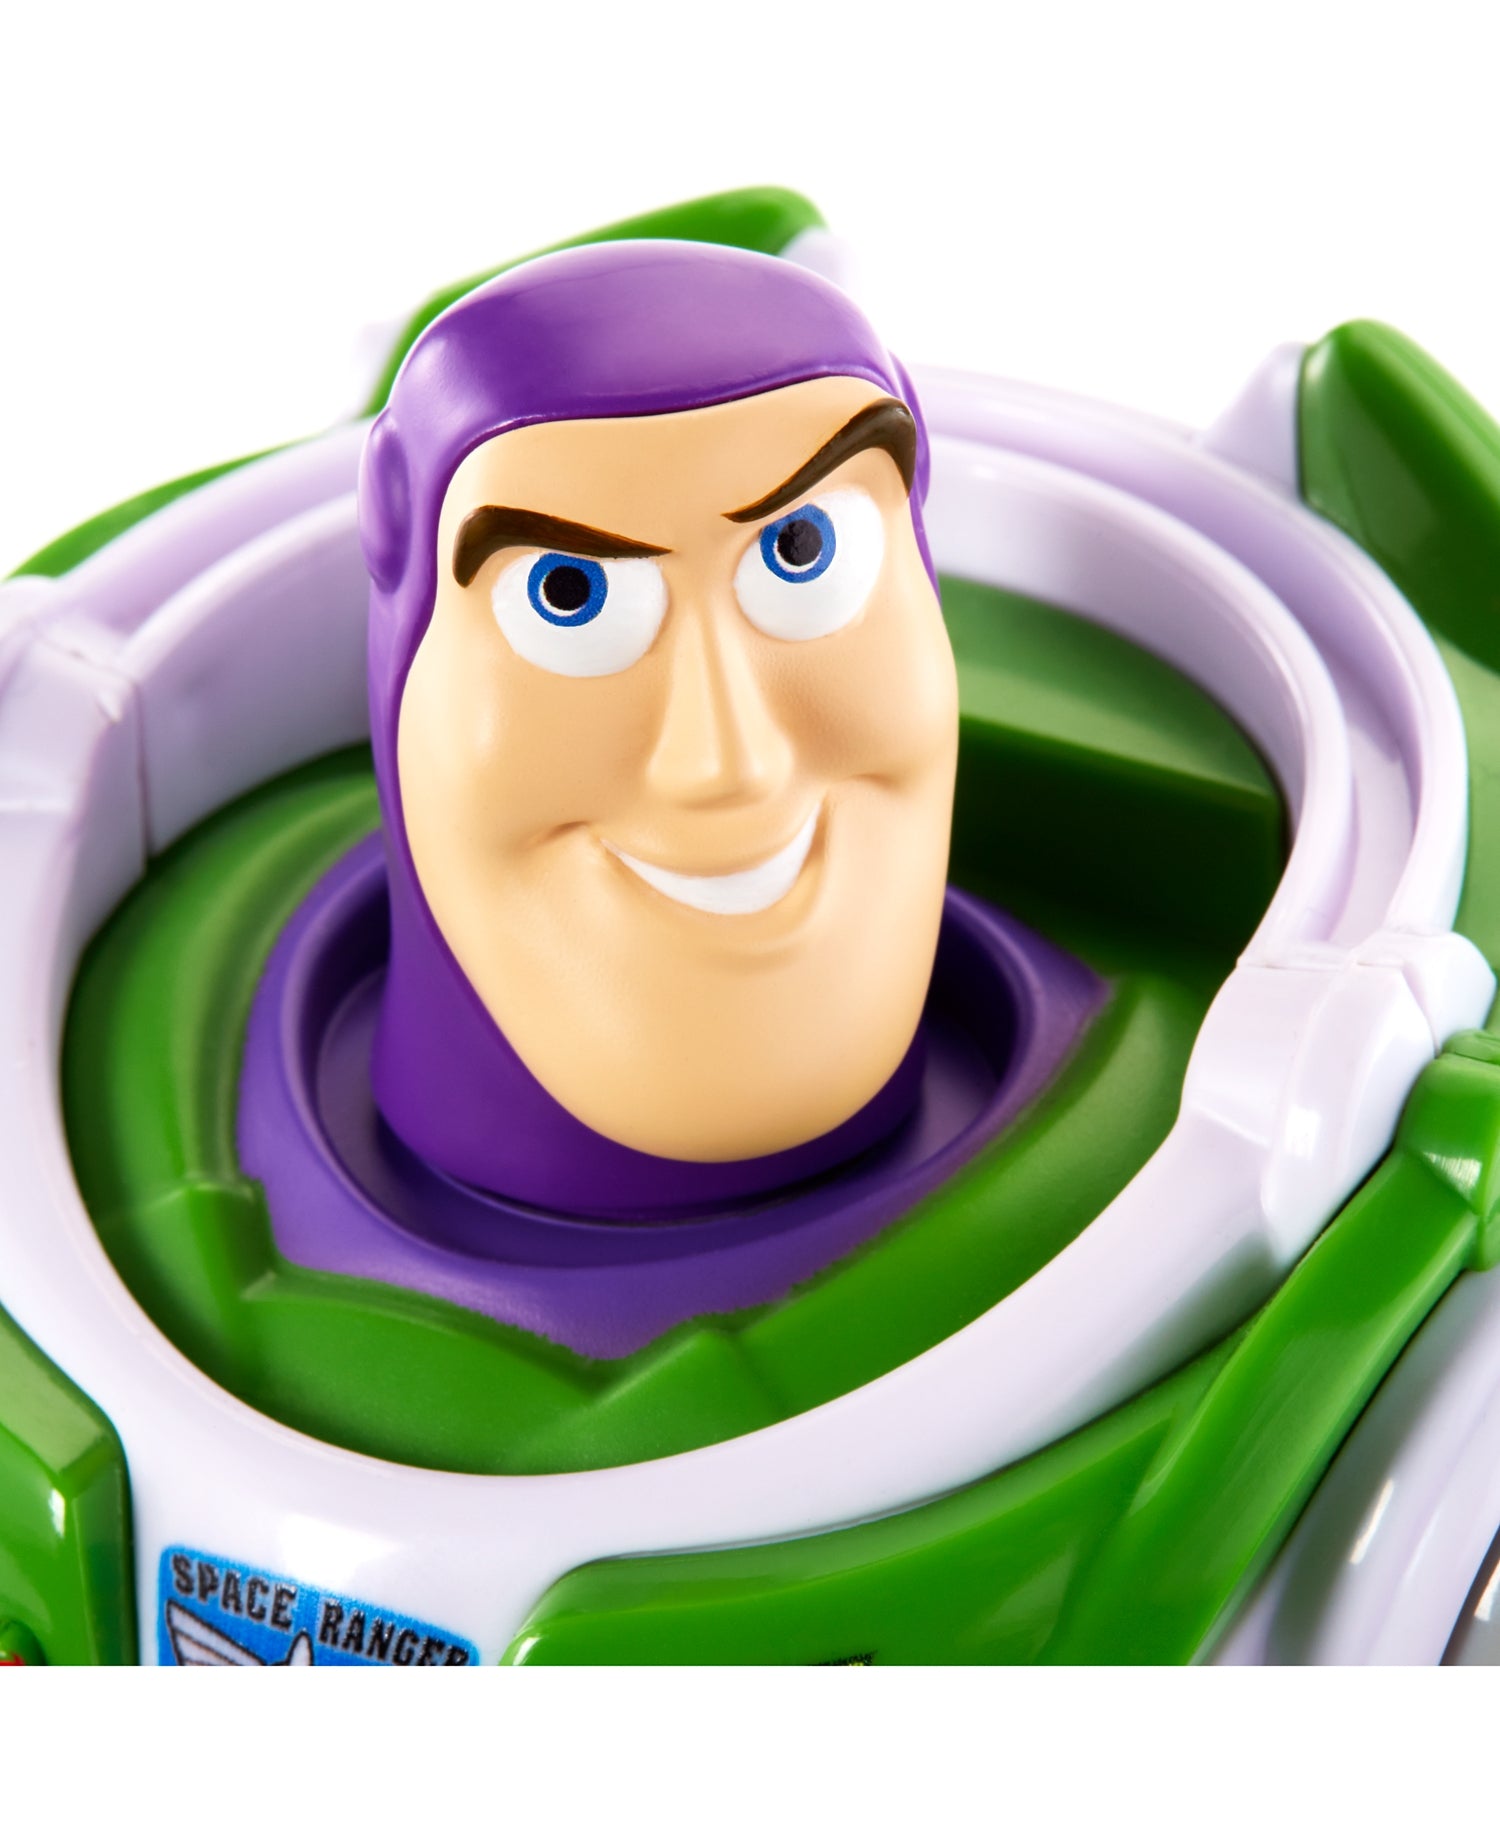 Disney Aged 3 Plus Pixar Toy Story True Talkers Buzz Lightyear Figure Toys